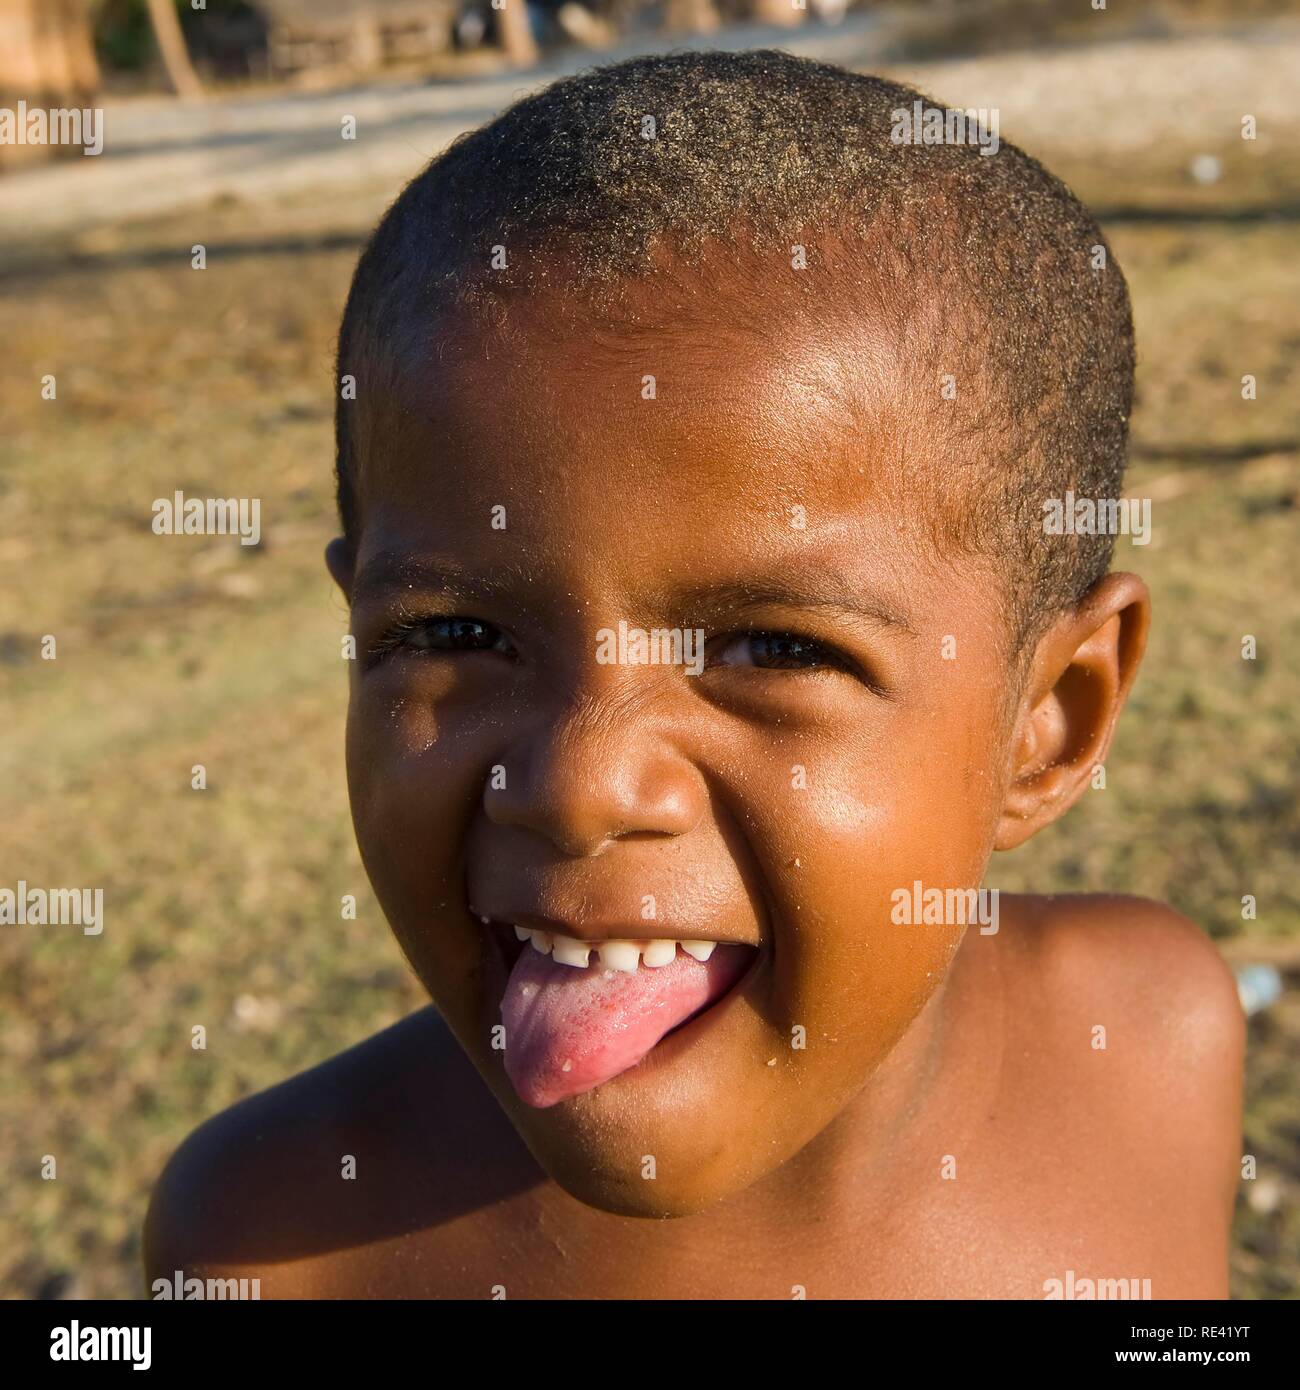 Boy from a fishing village, Morondava, Madagascar, Africa Stock Photo